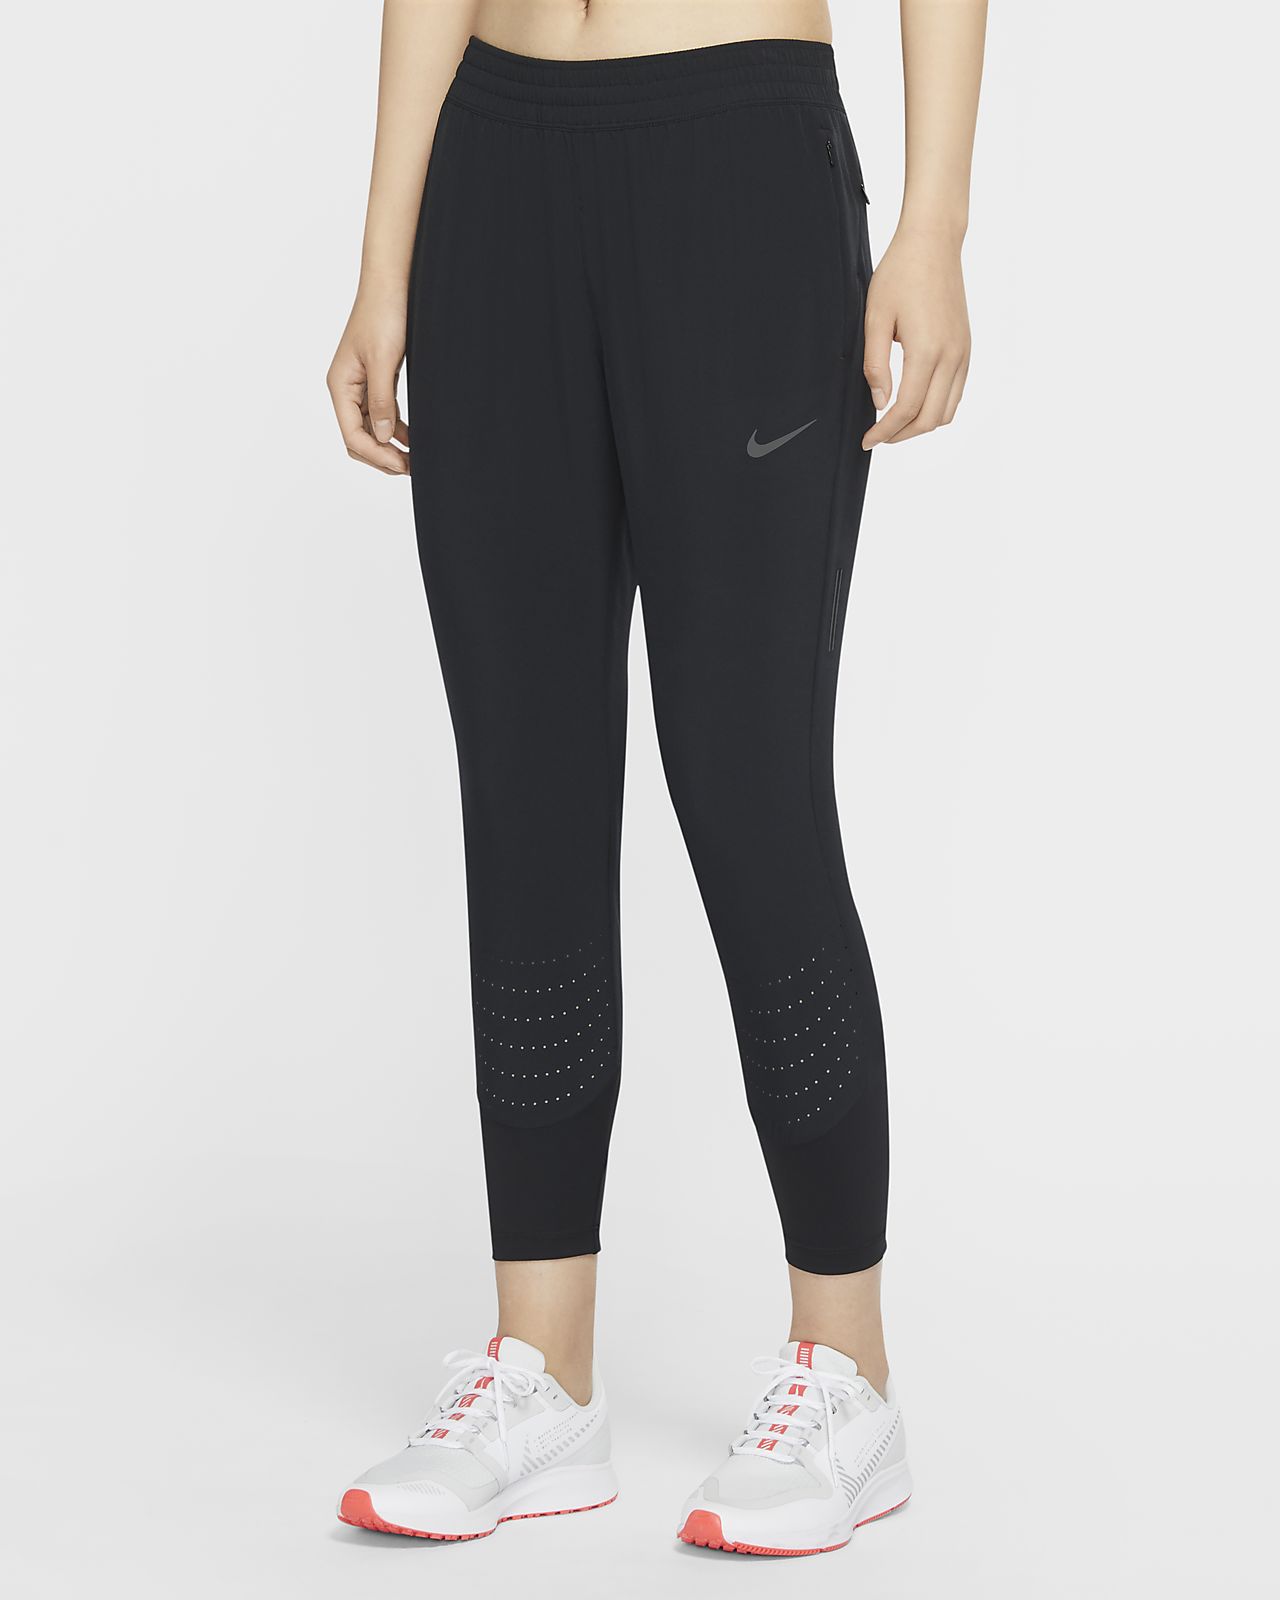 Nike Swift Women's Running Trousers. Nike EG